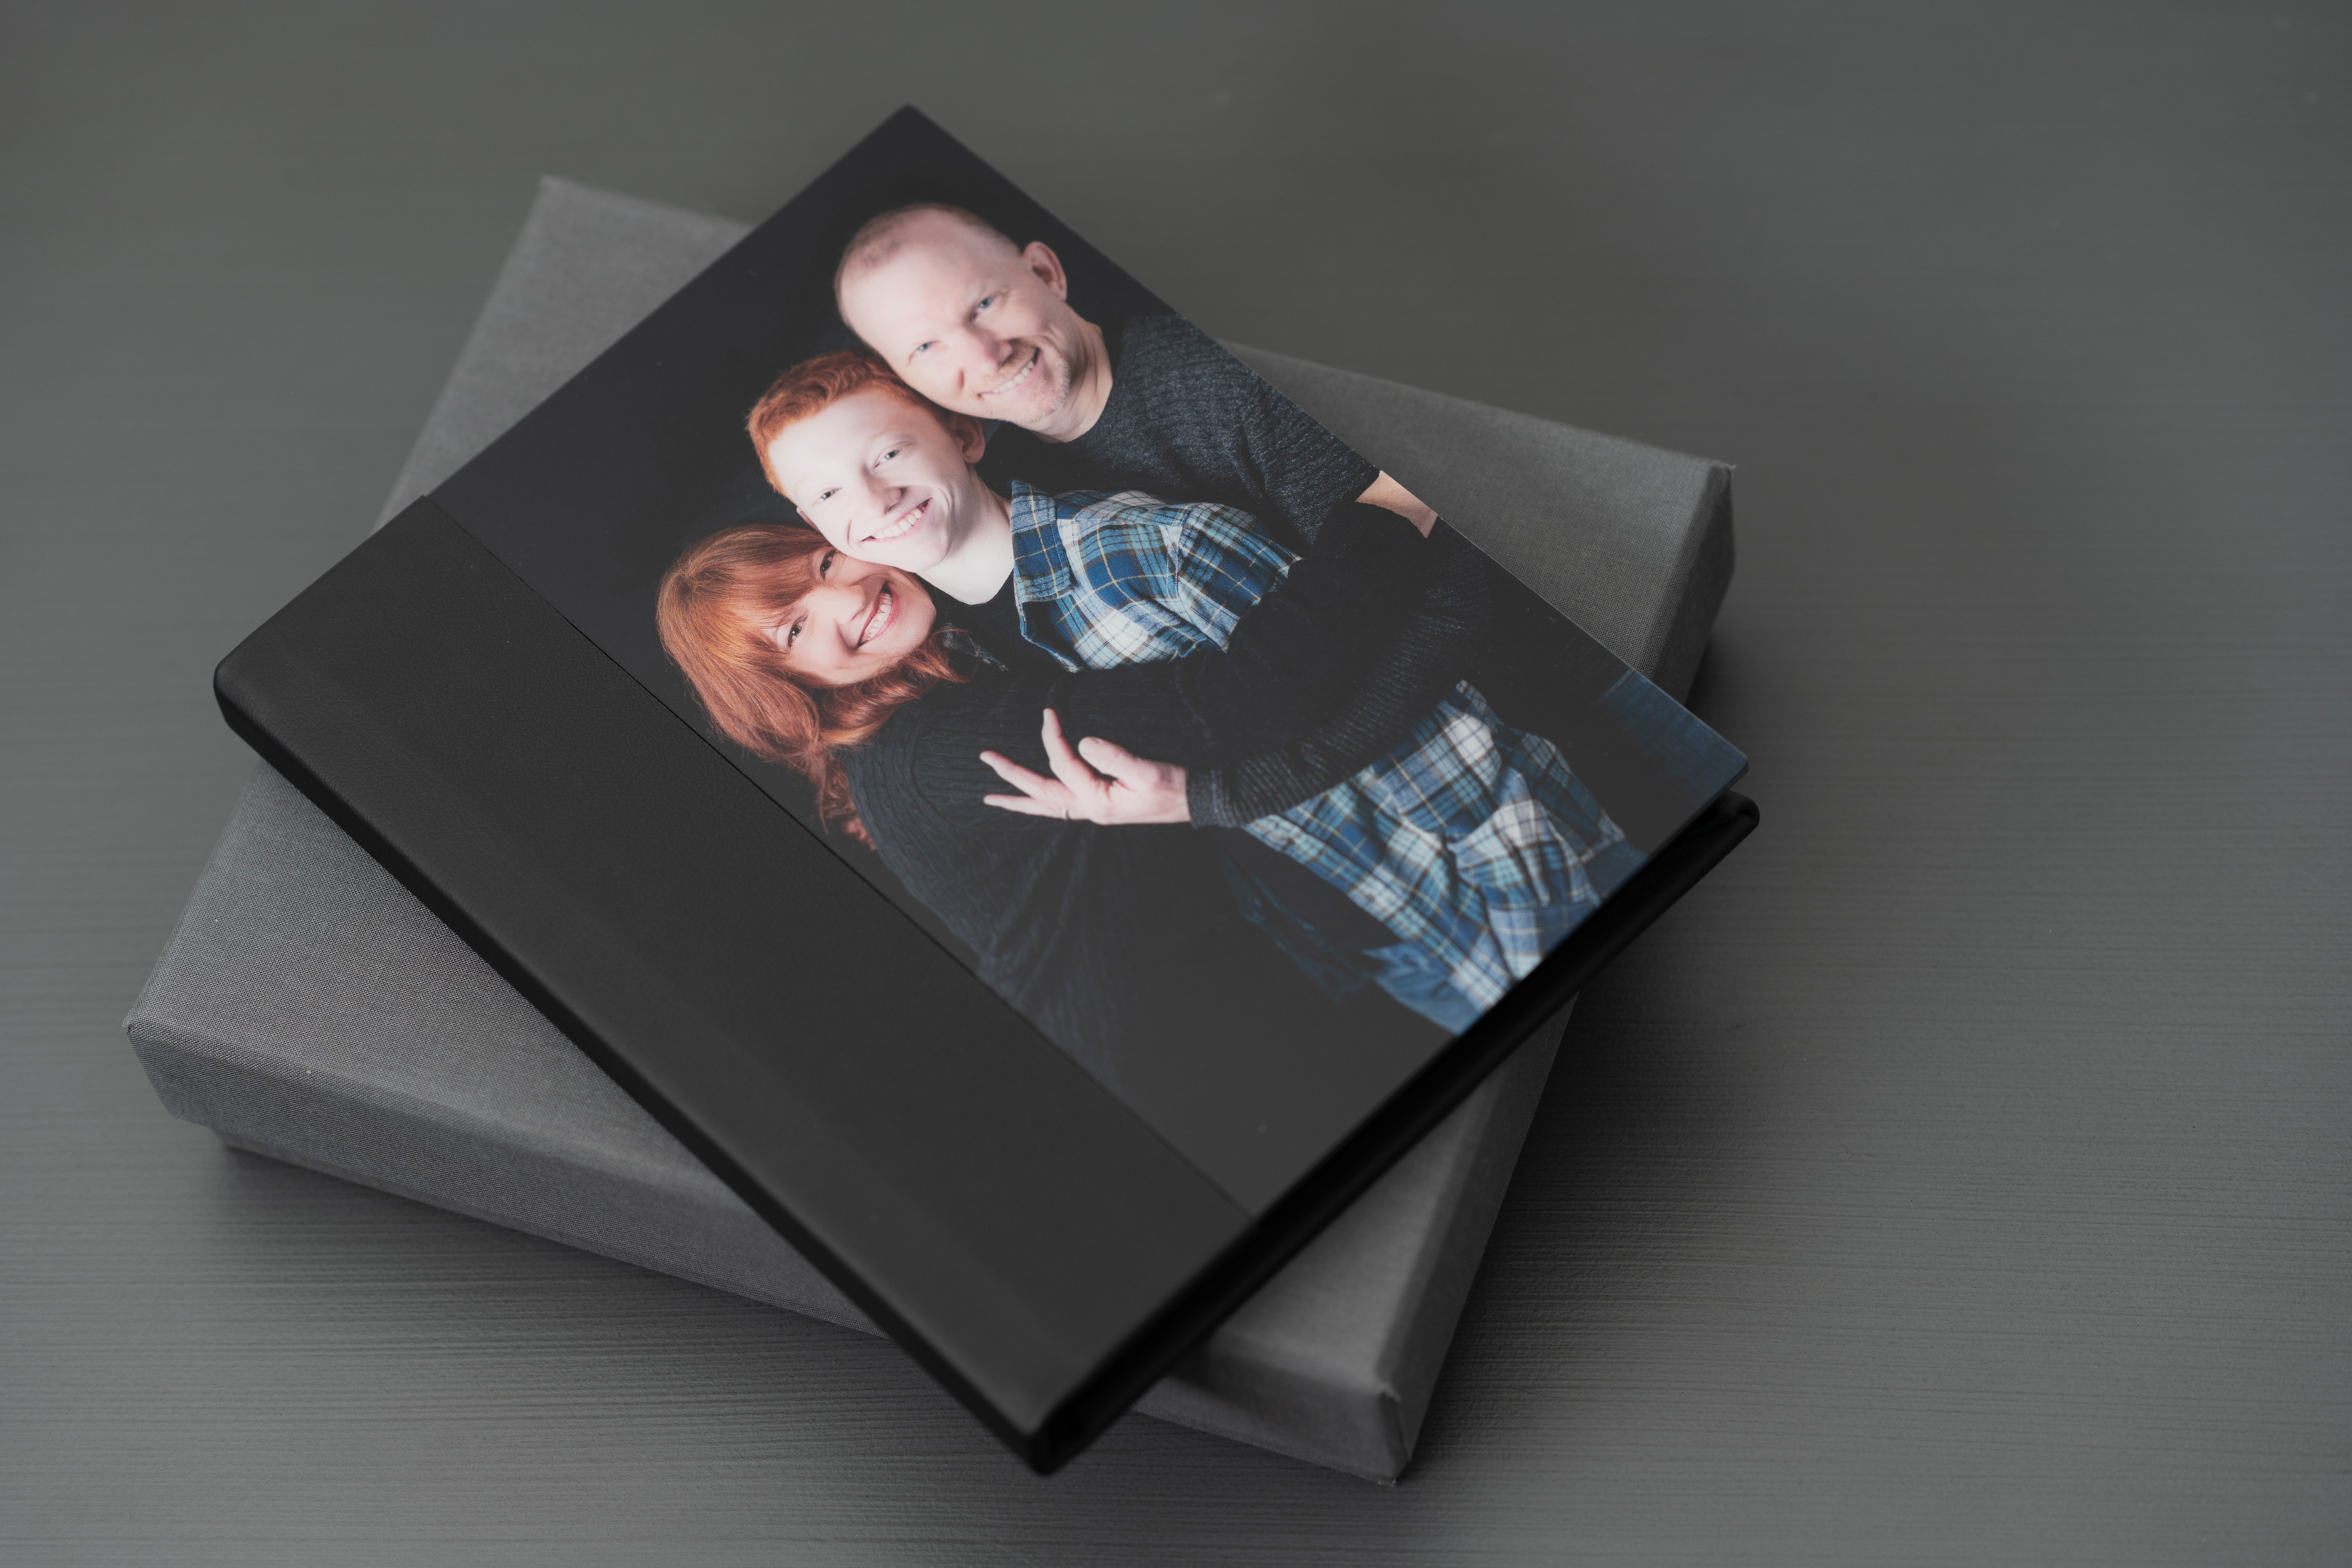 Family photo album sitting on box